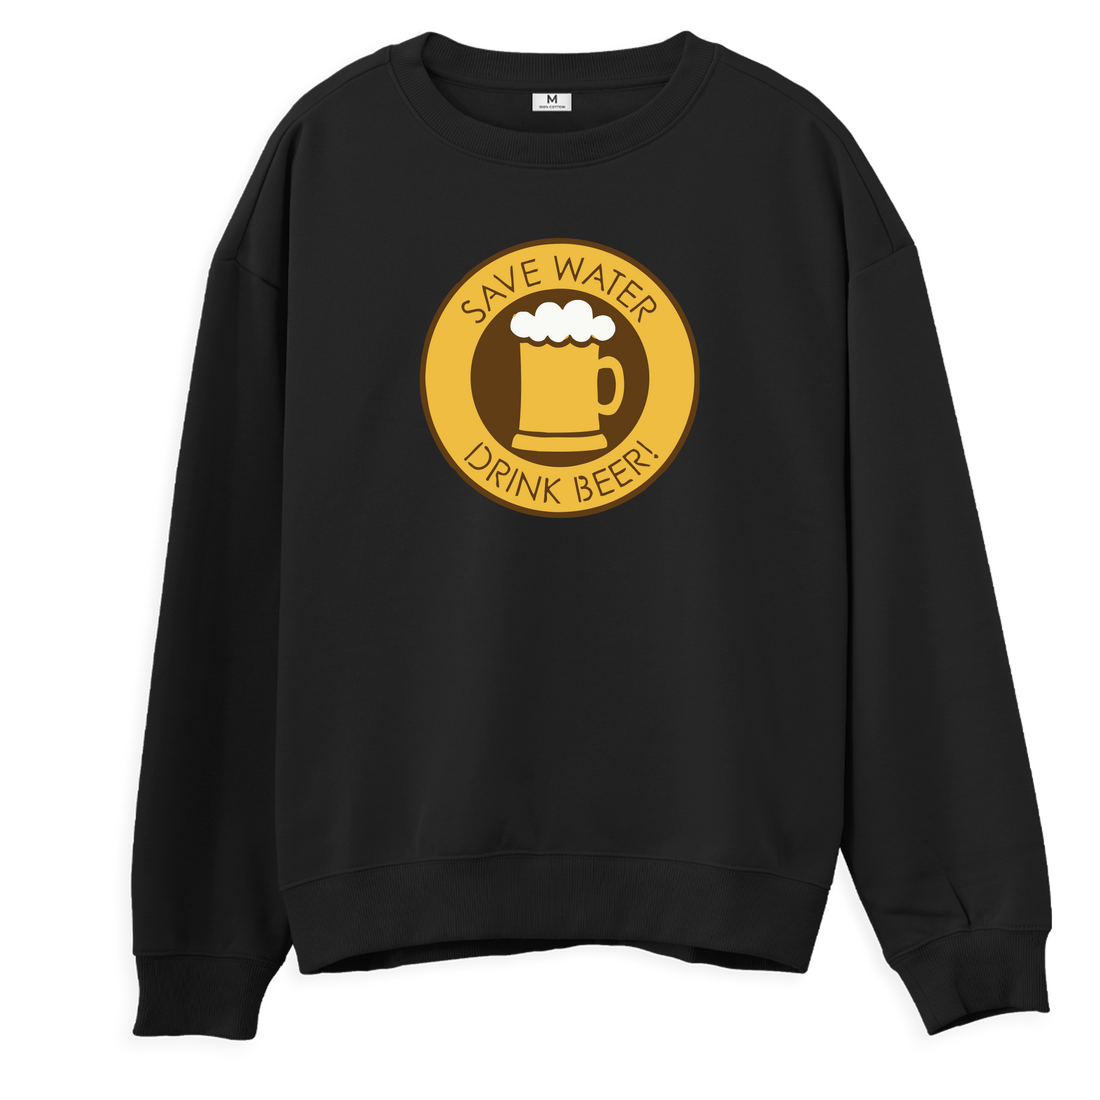 Save Water Drink Beer - Sweatshirt -Regular